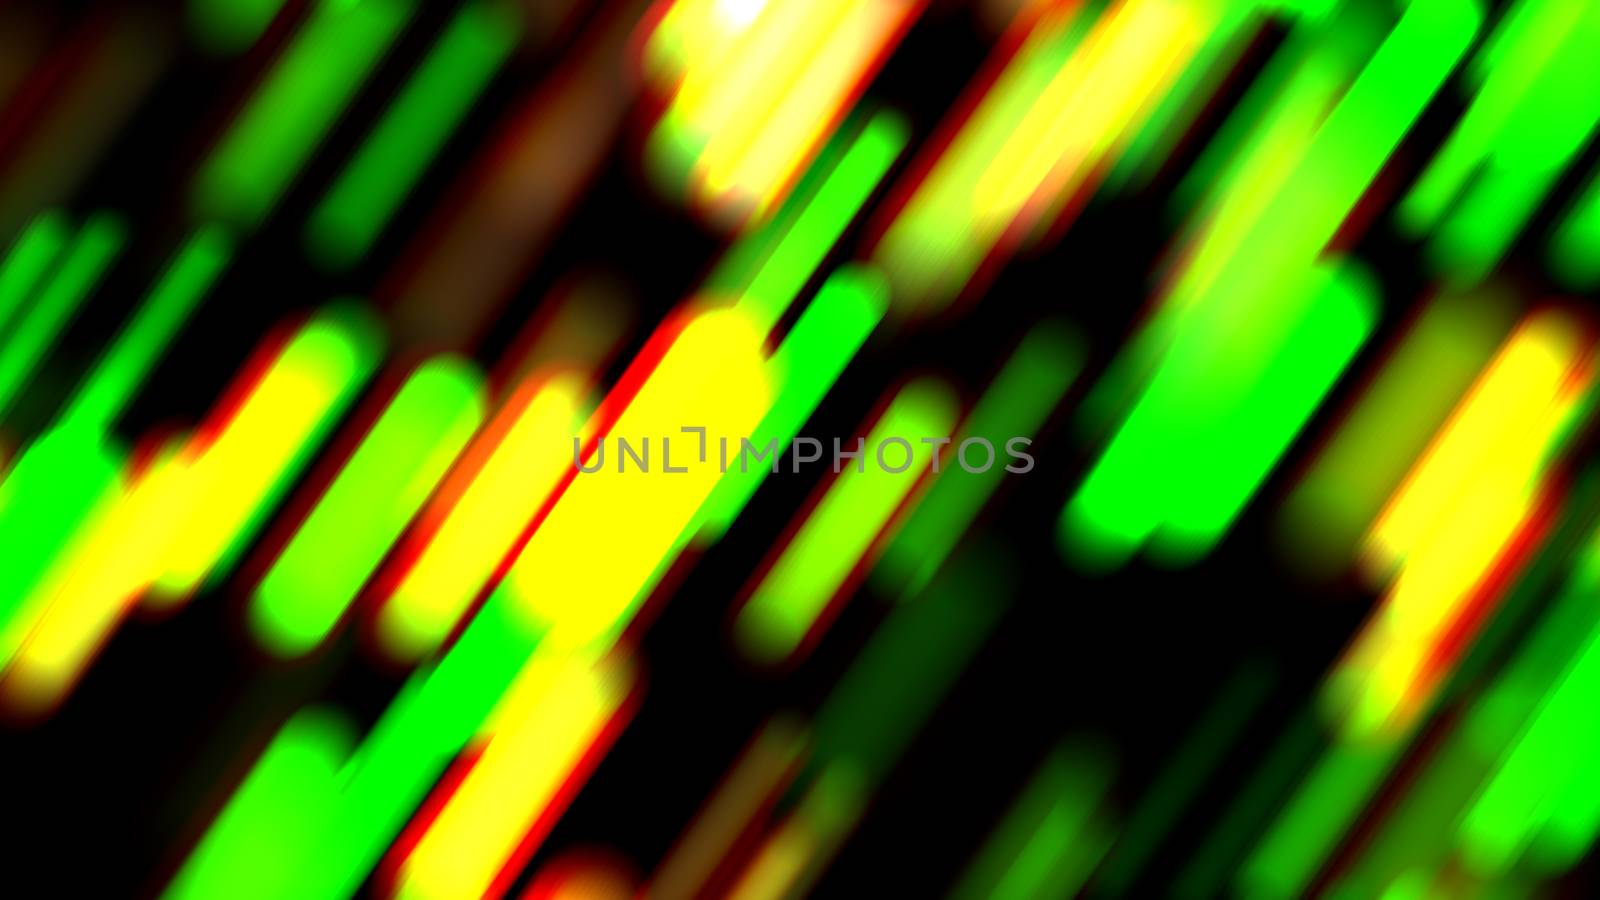 Abstract colorful light streak. Digital illustration by nolimit046